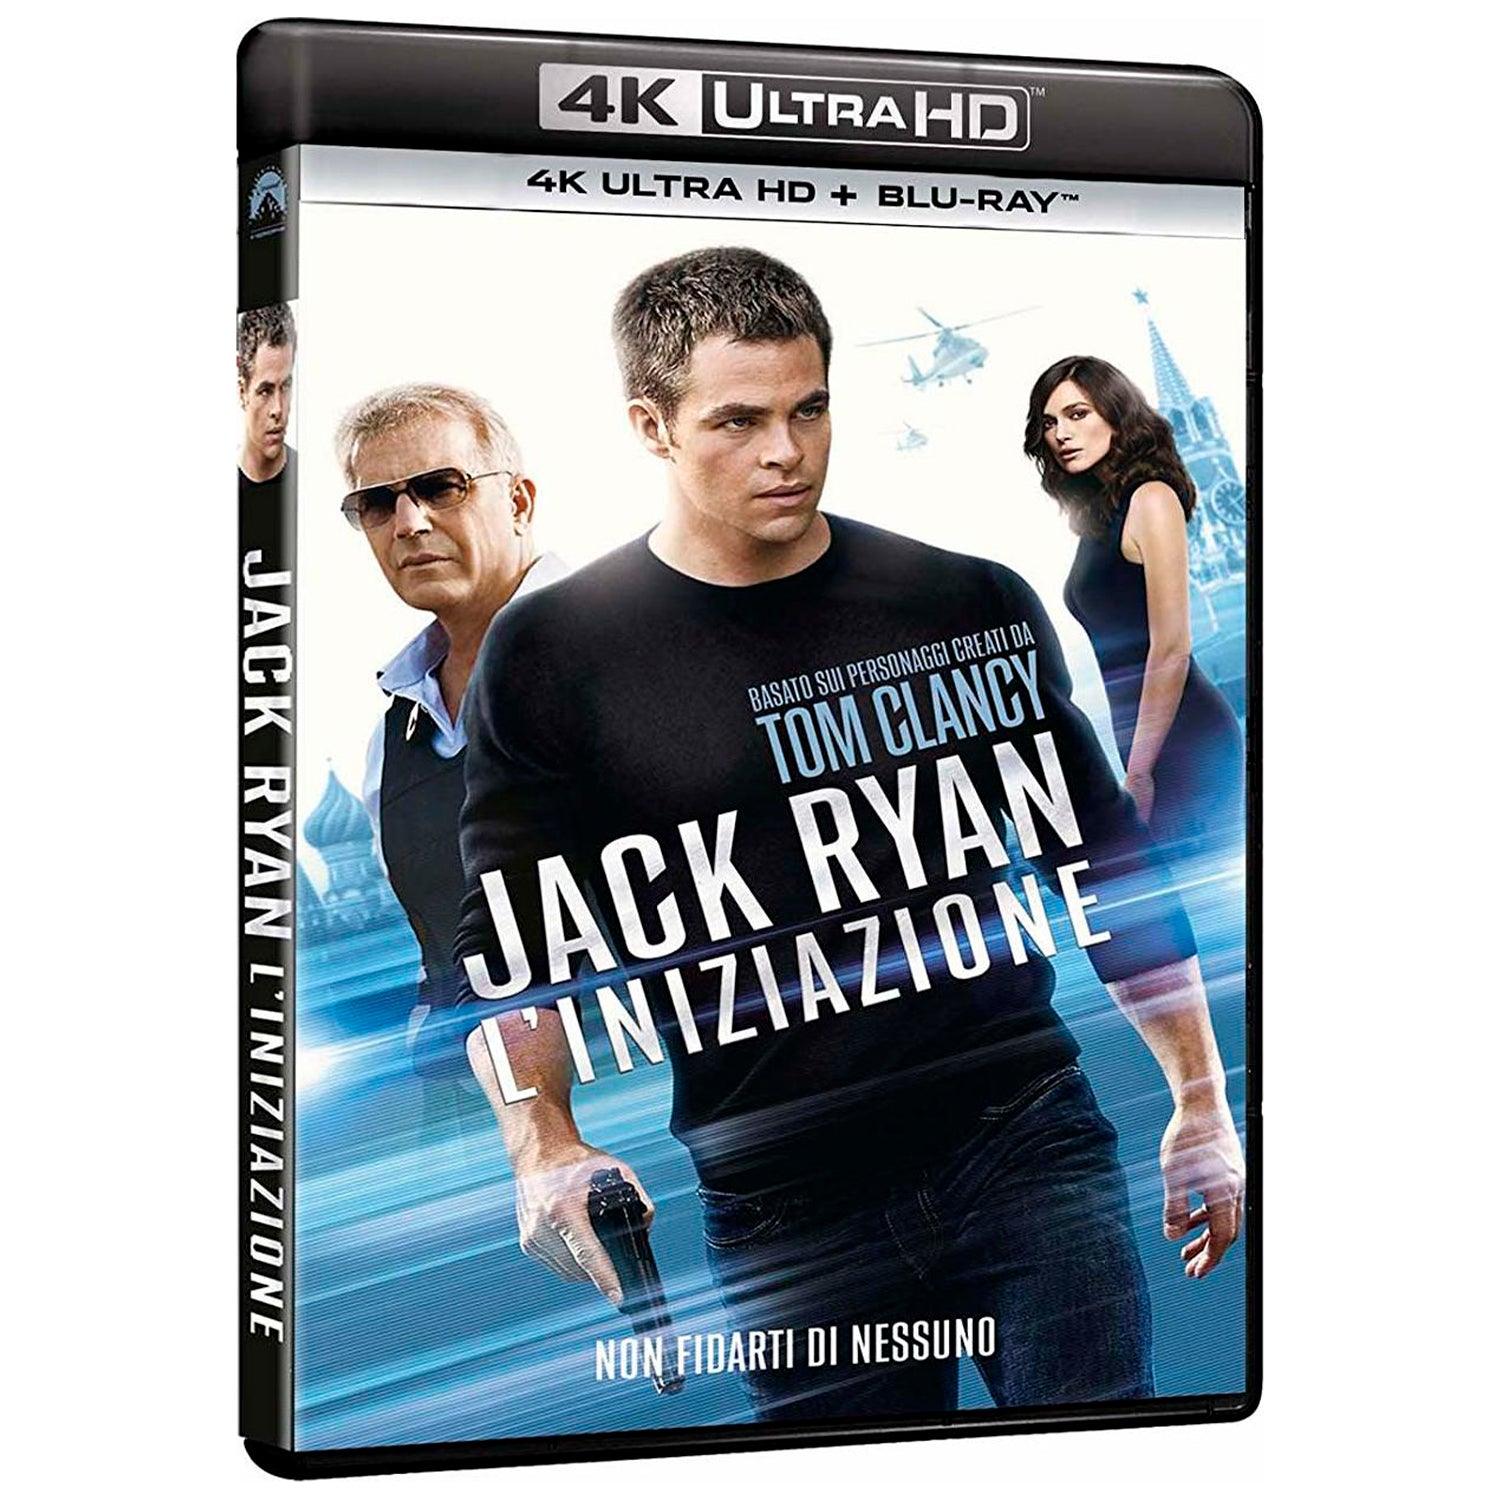 Джек Райан: Теория хаоса (4K UHD Blu-ray)